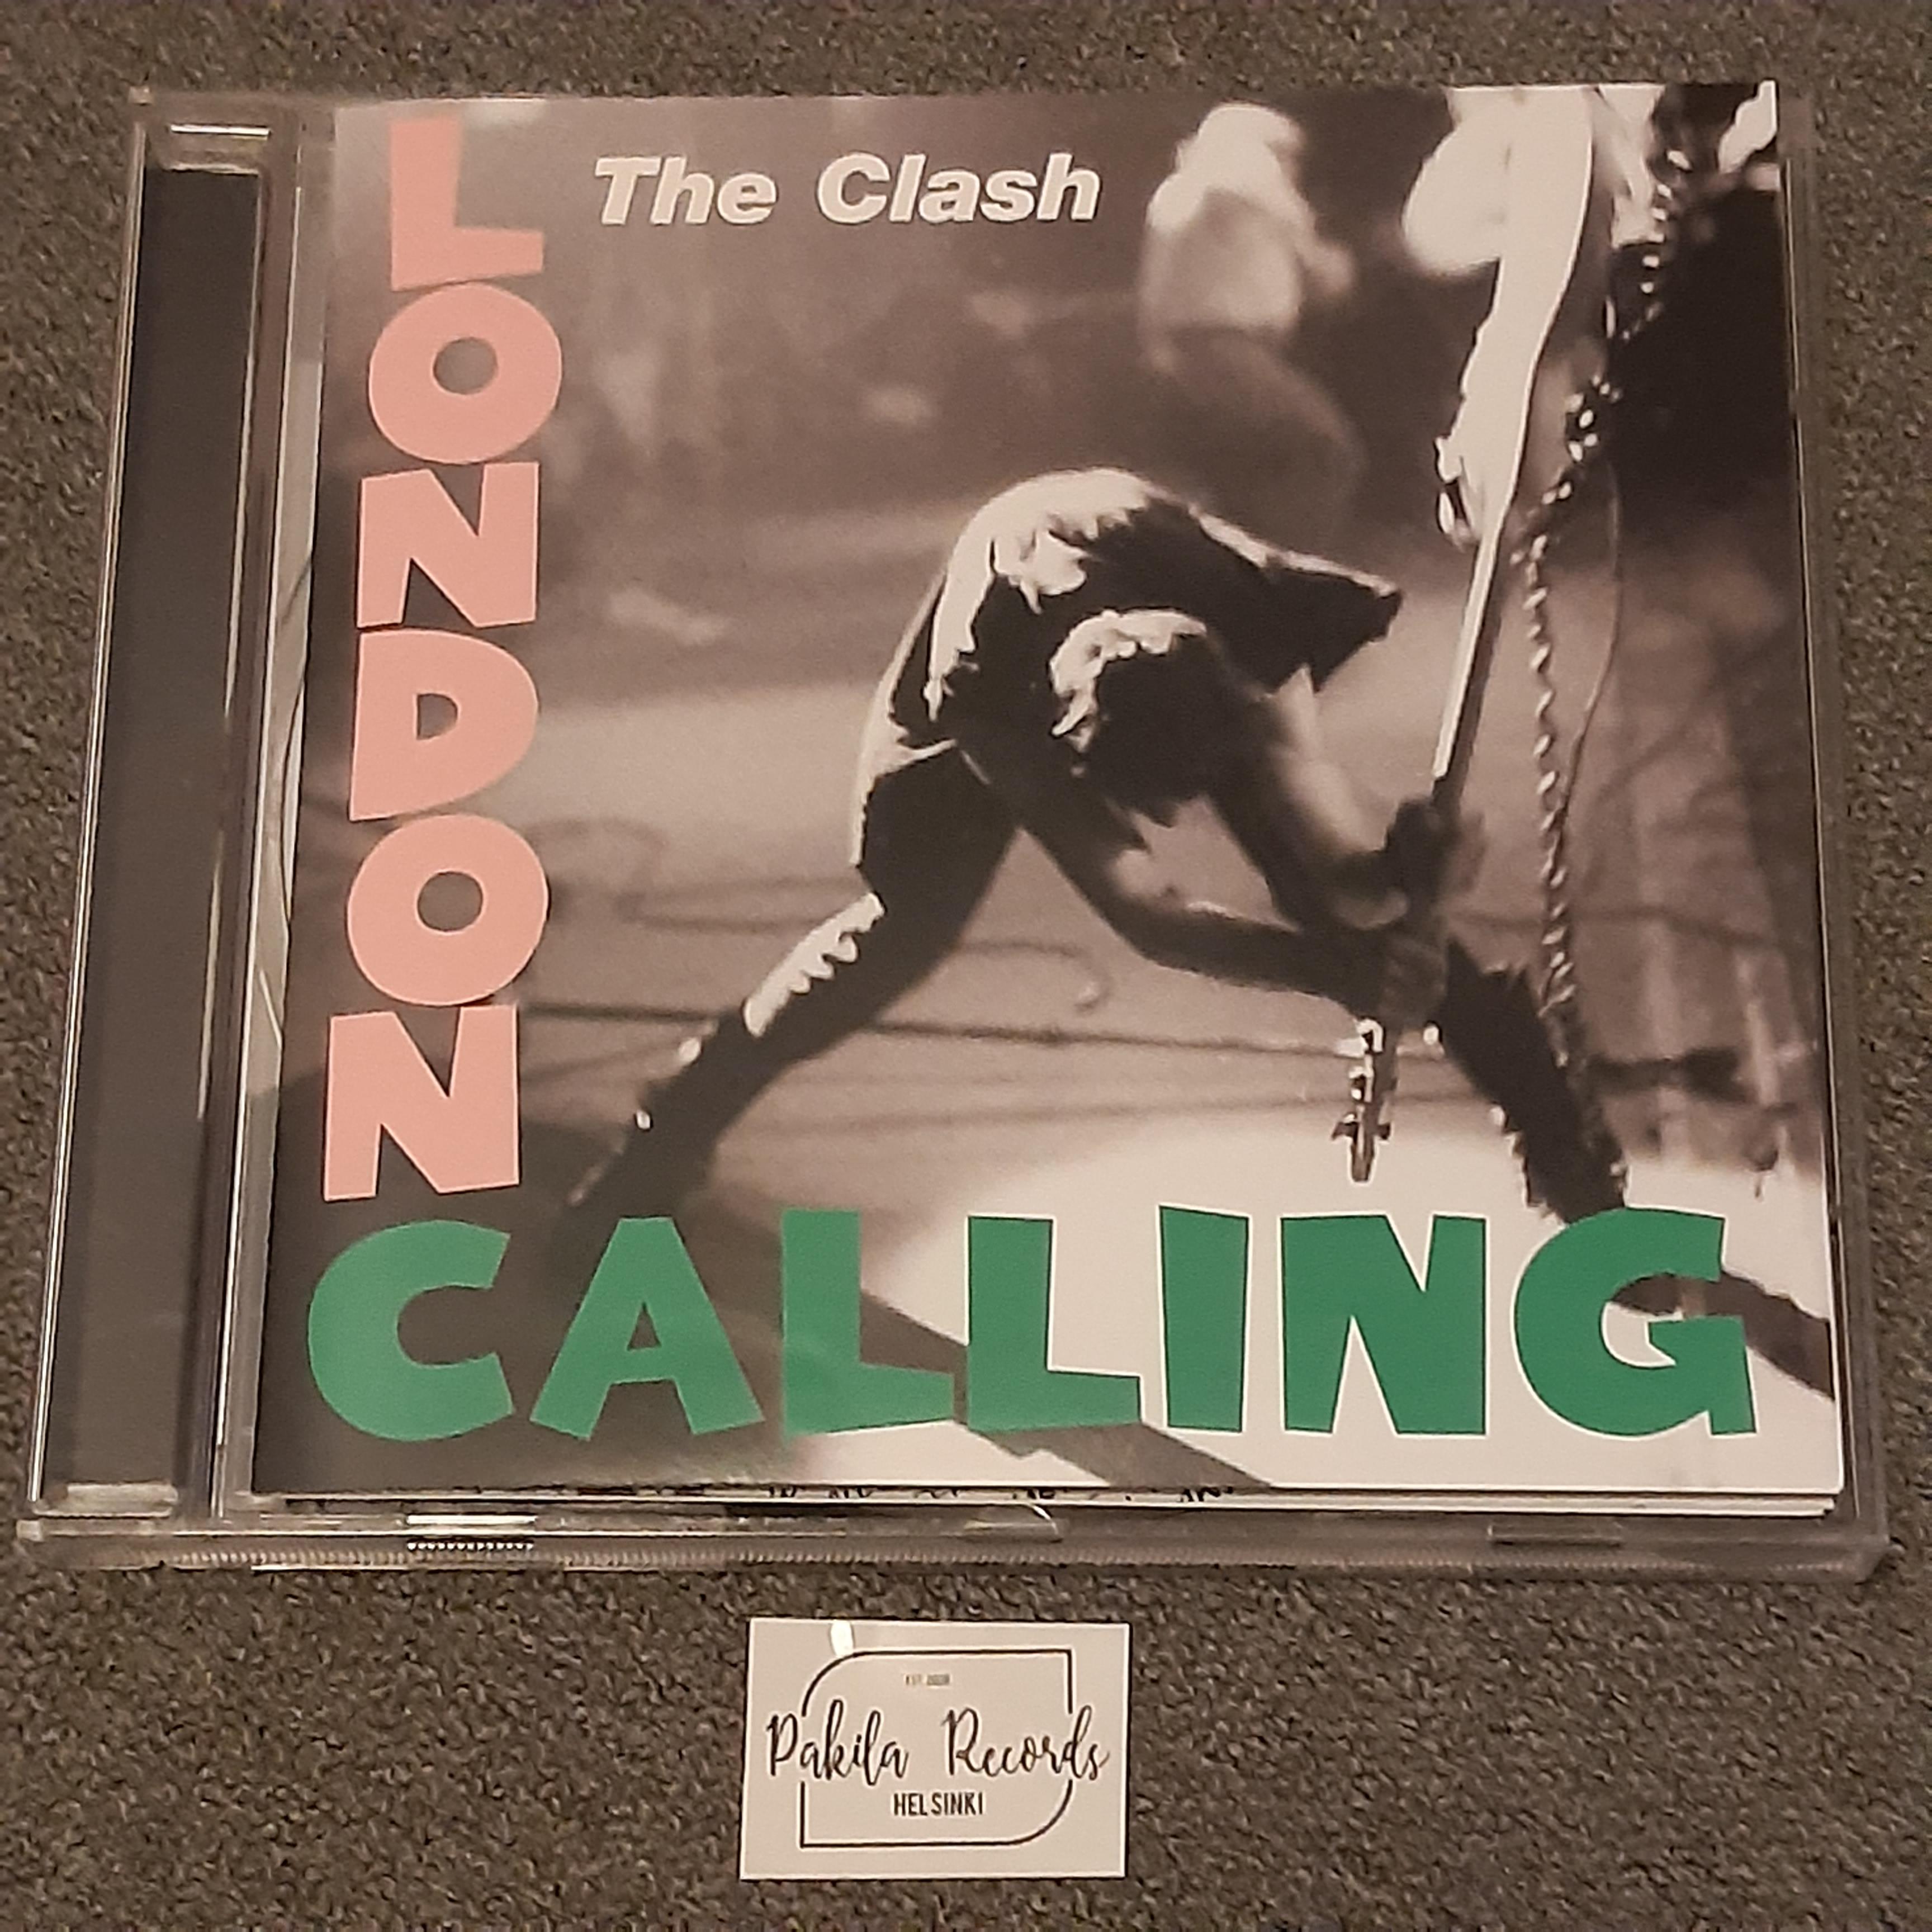 The Clash - London Calling - CD (käytetty)